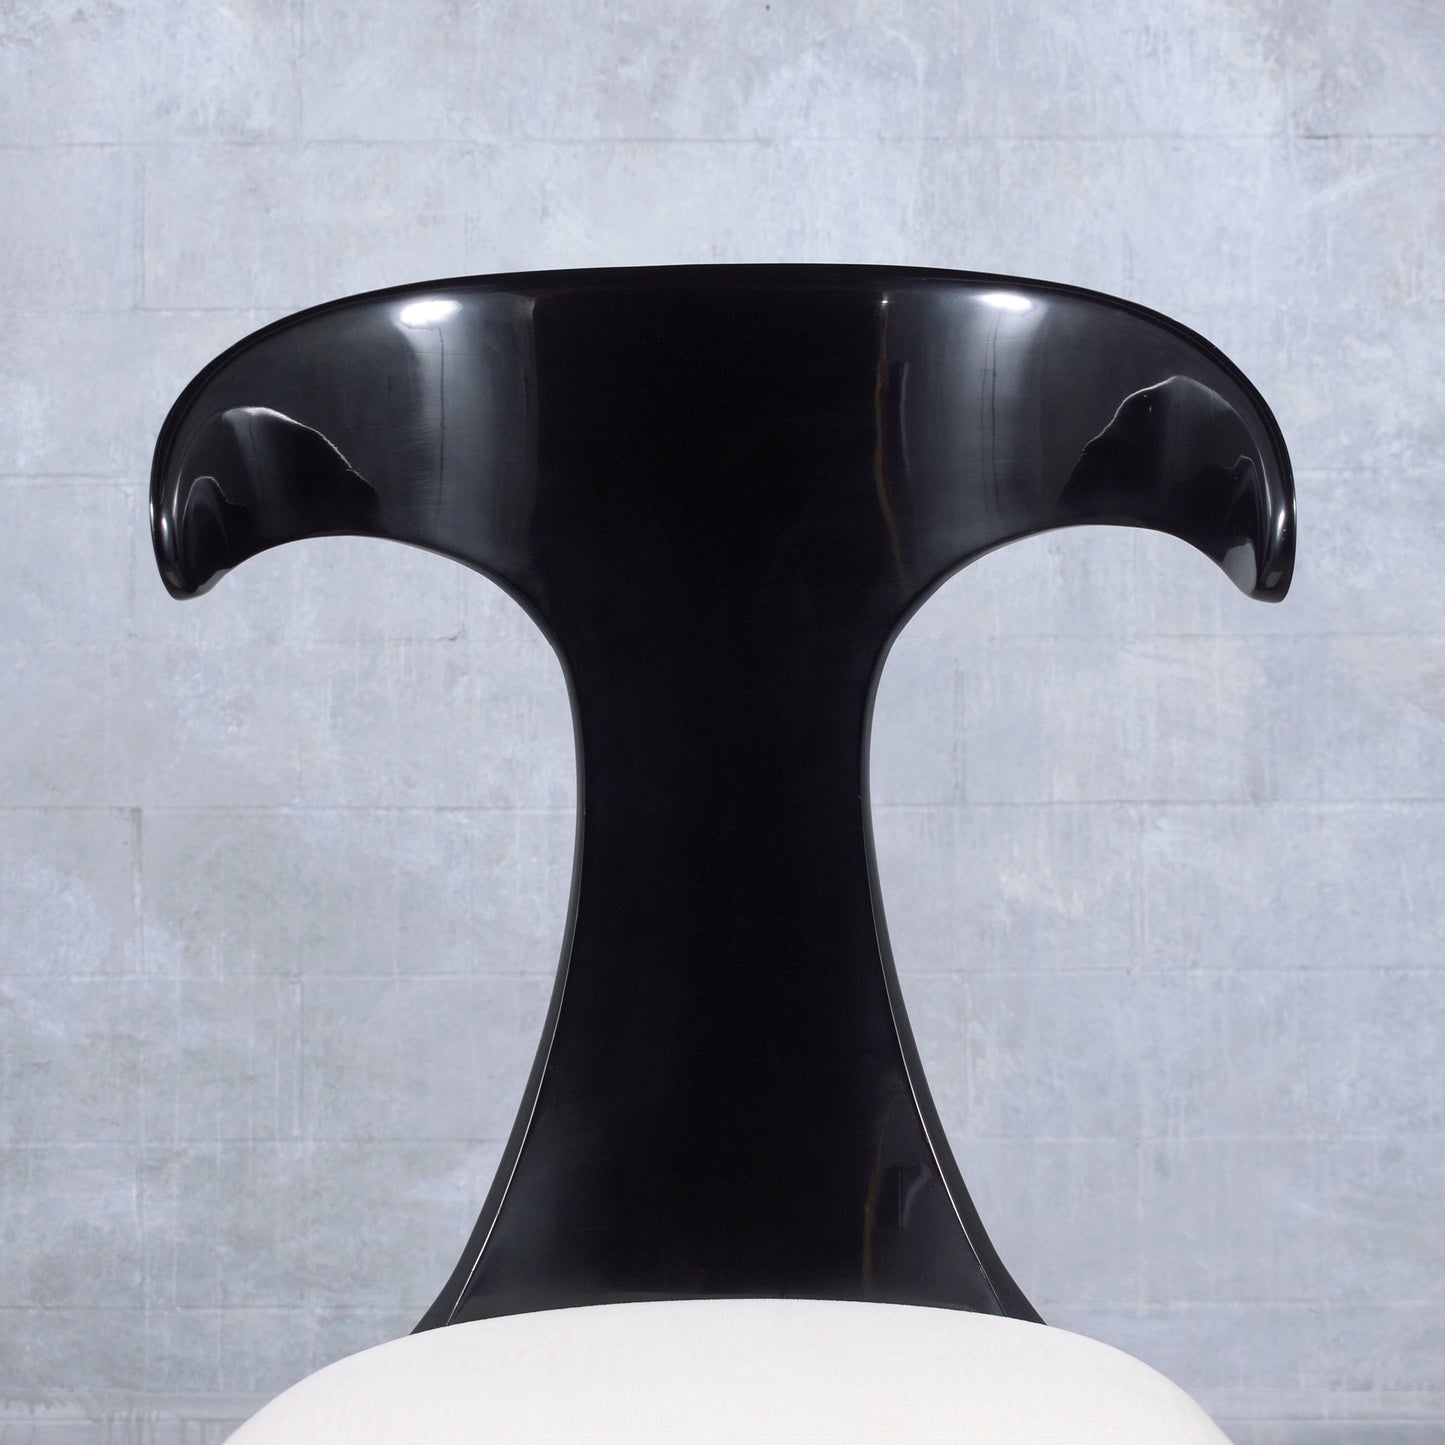 Ebonized Modernism Side Chair: Refinished Bent Wood with High Backrest Design